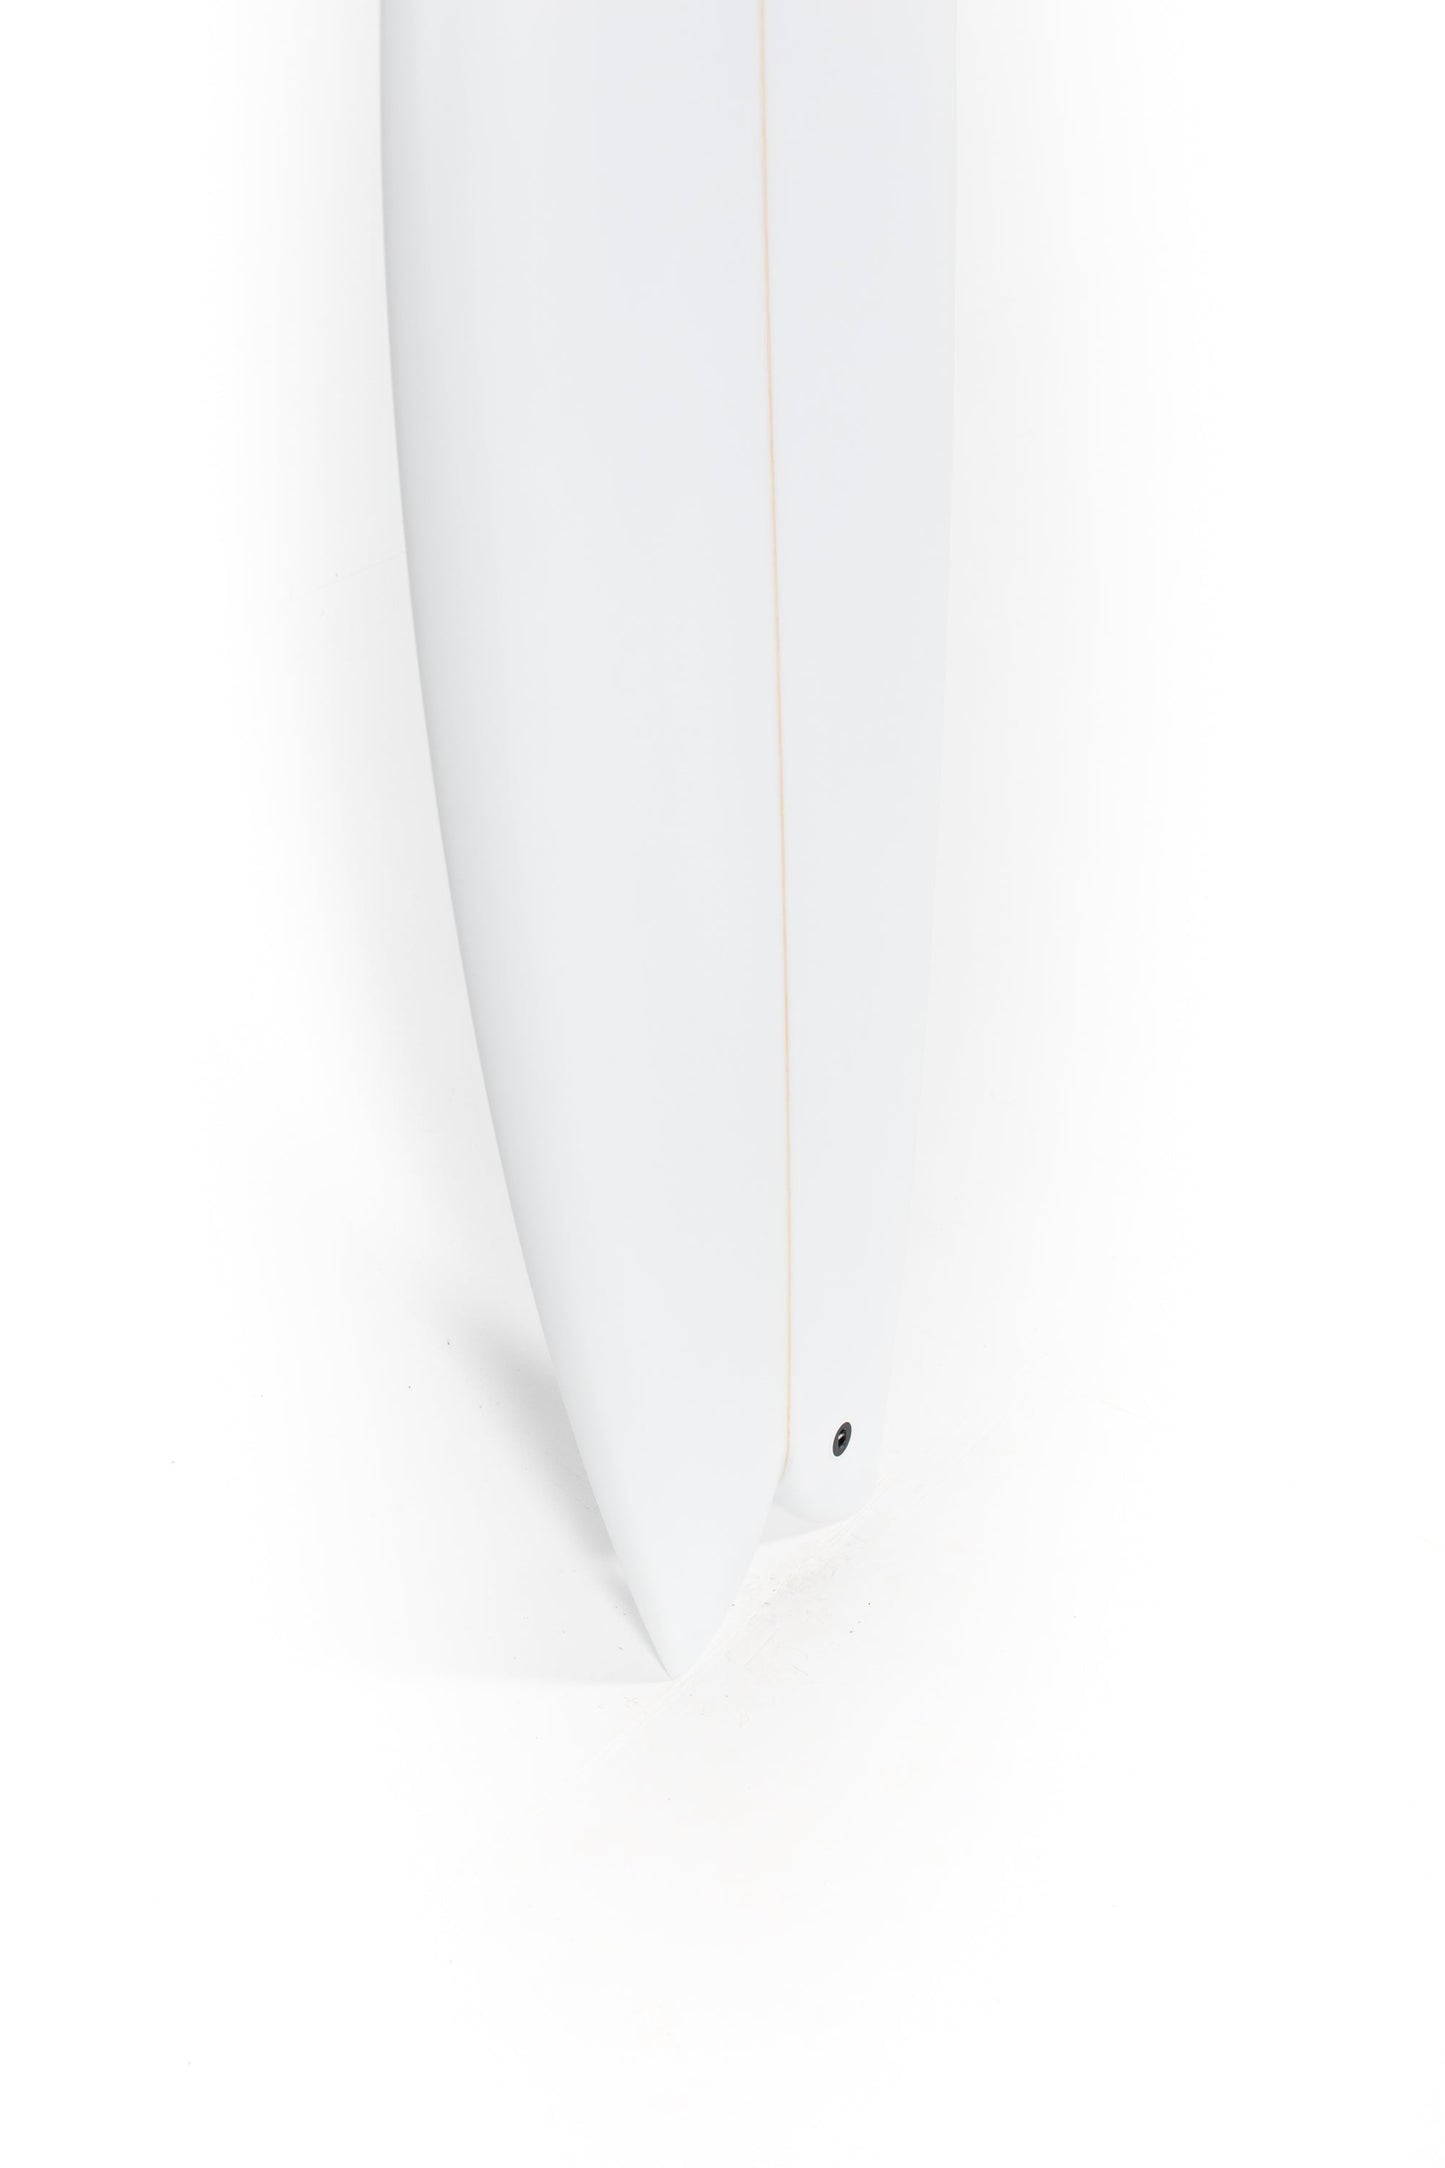 
                  
                    Pukas Surf Shop - Kream Surfboards - FISH - 5'6" - 20 3/4 - 2 7/16 - 32.07L
                  
                